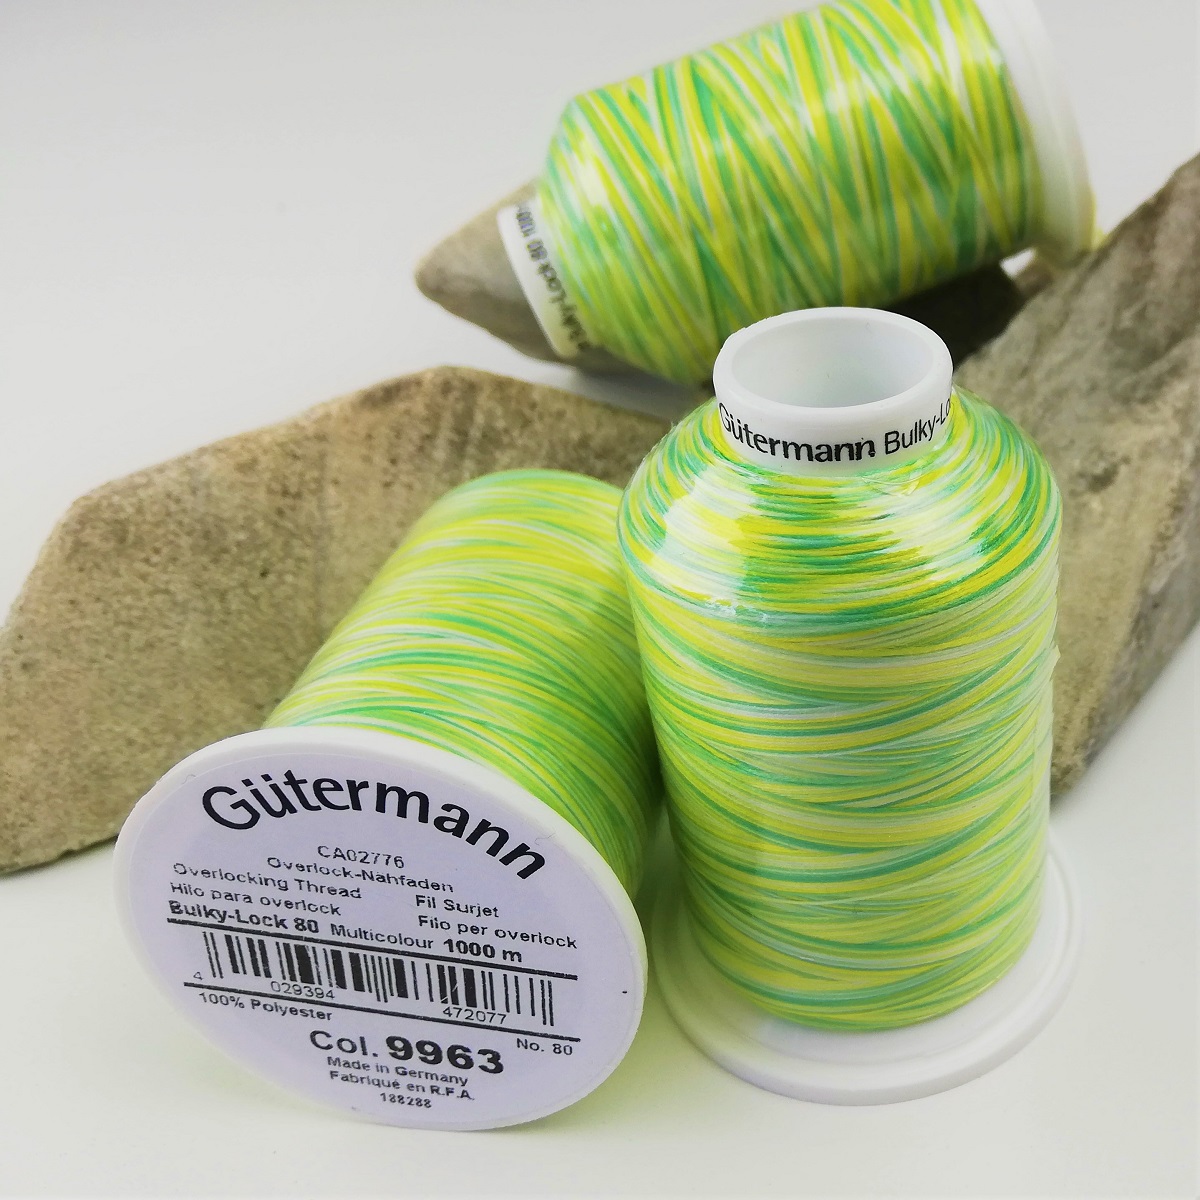 Gütermann Bauschgarn Bulky-Lock 80 Multicolor "light green" 9963, 1000m